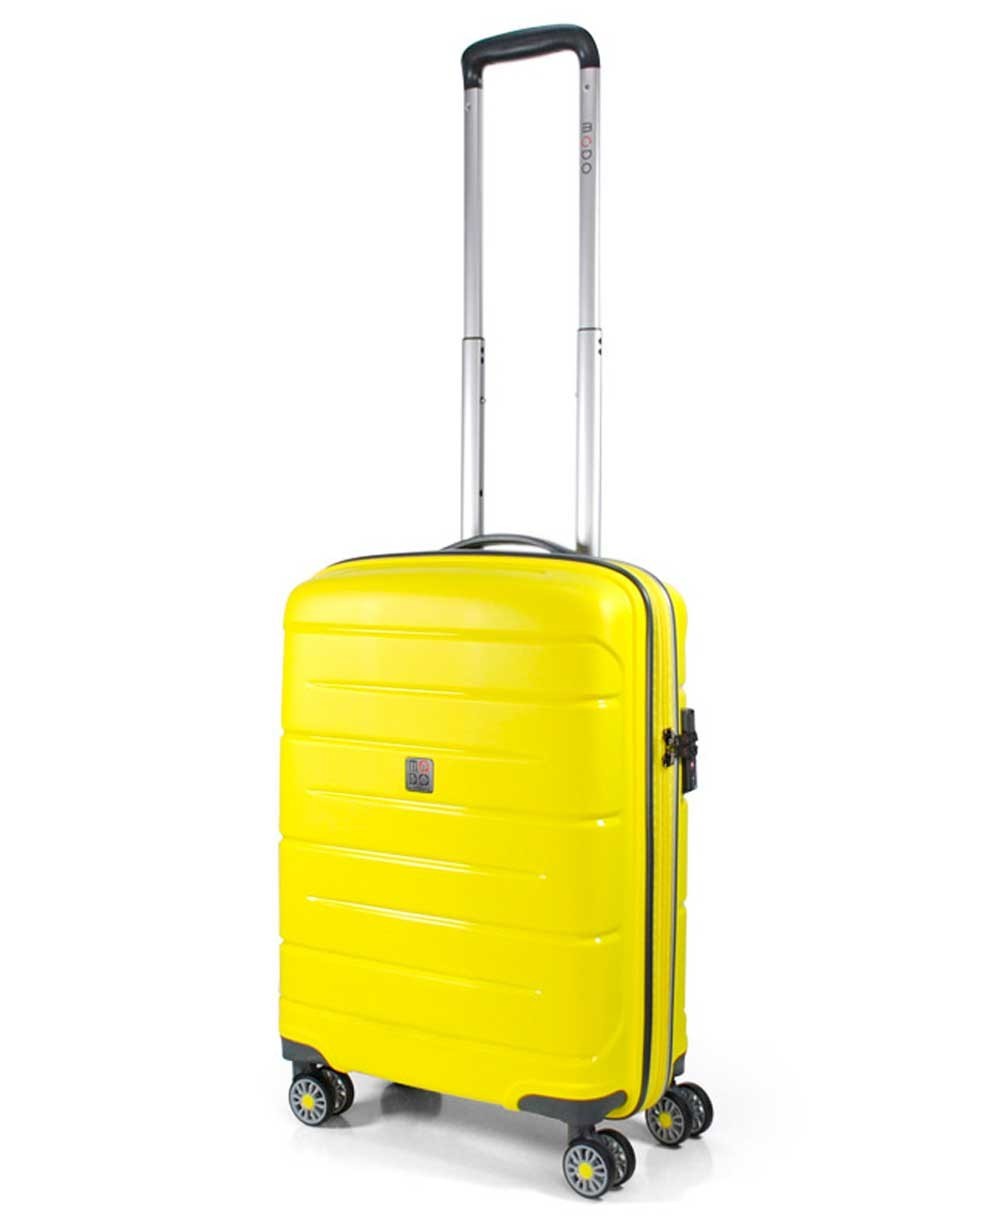 maleta de mano amarilla